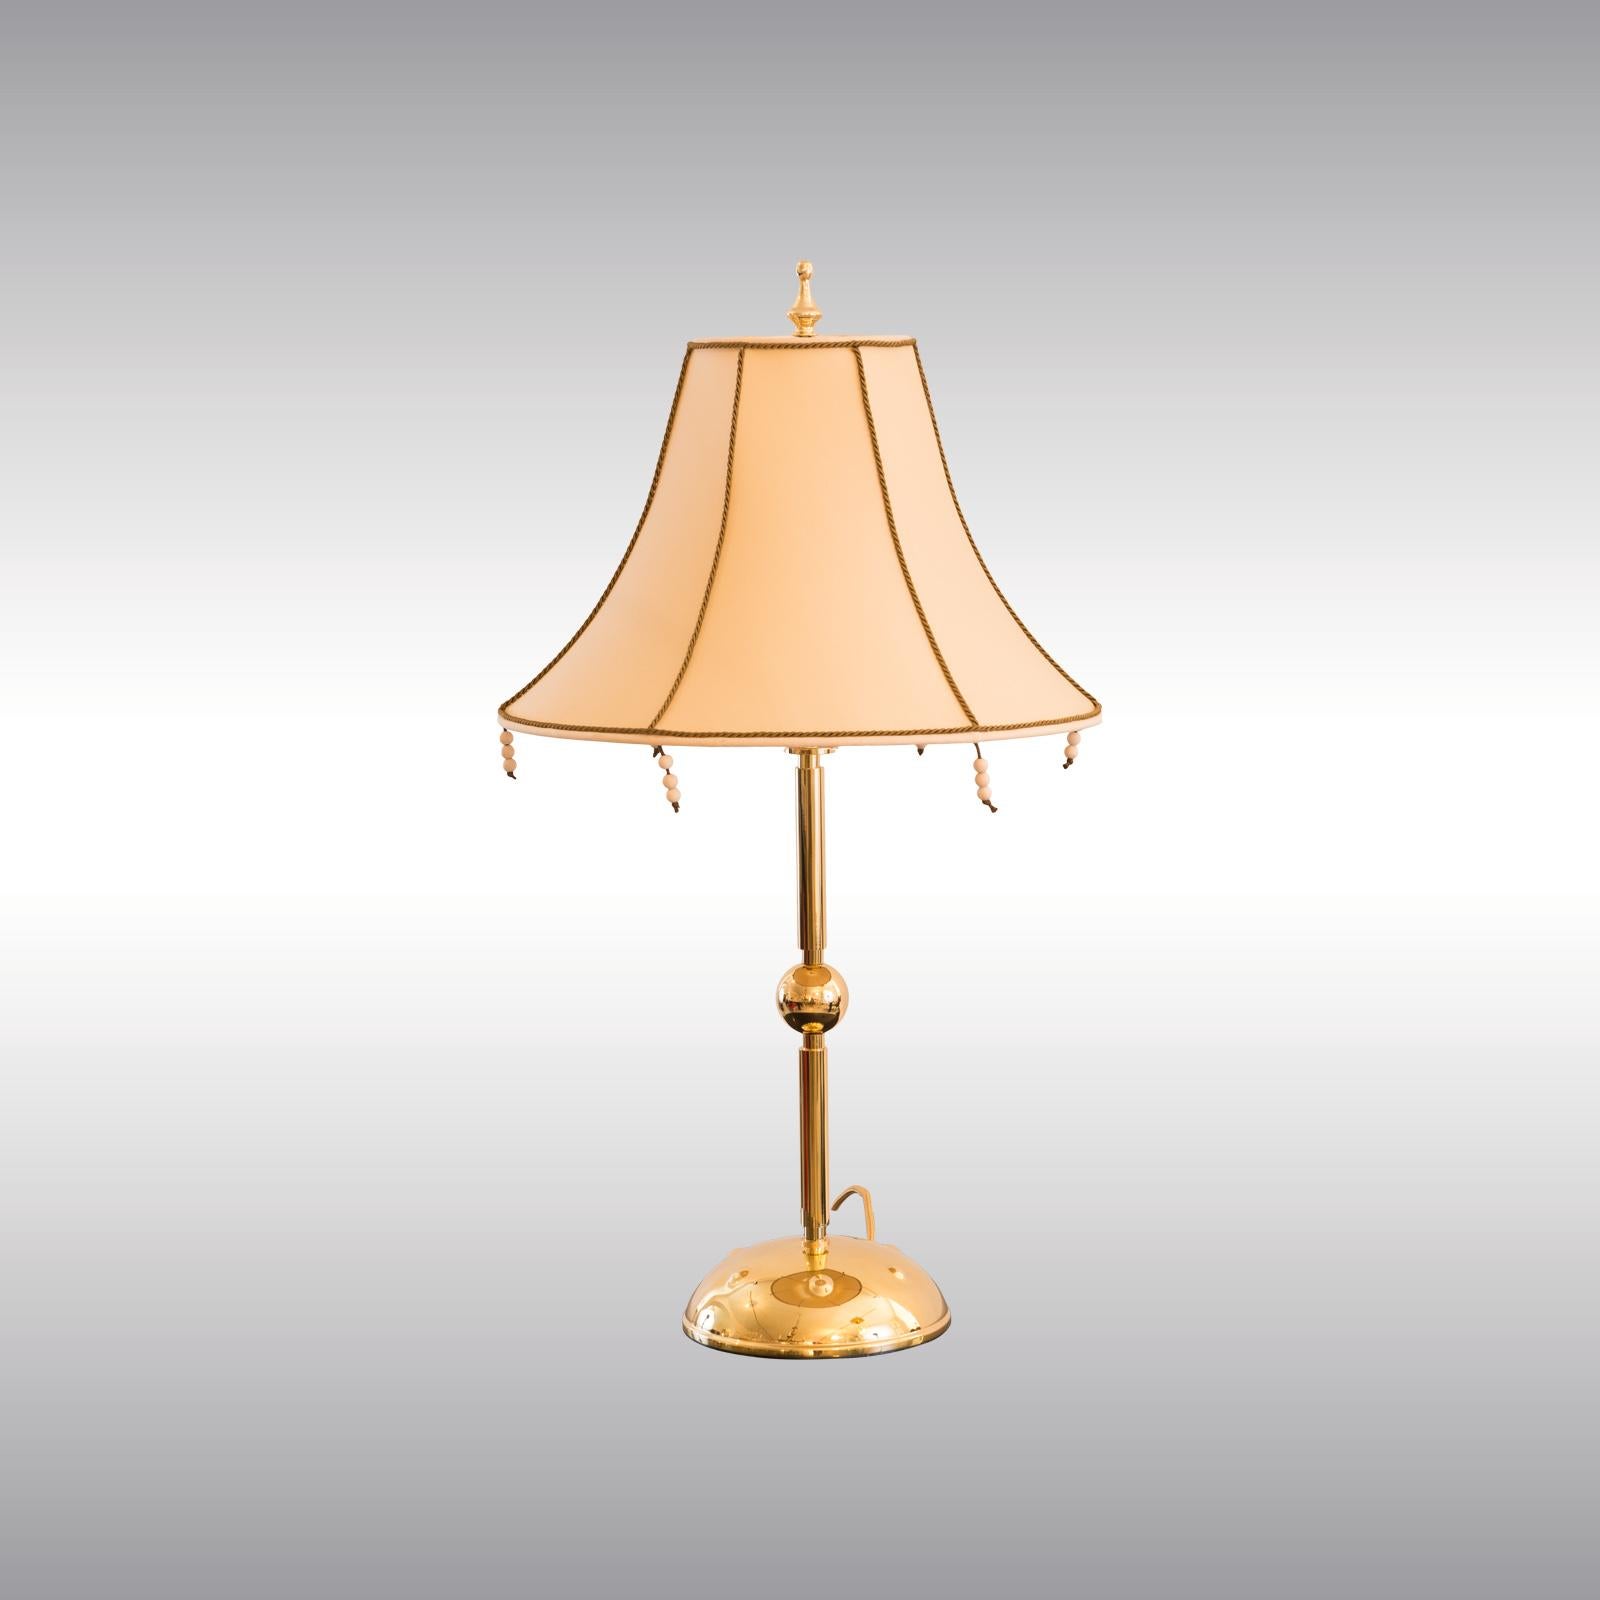 Austrian Josef Hoffmann & Wiener Werkstäette Jugendstil Art Nouveau Table Lamp Re-Edition For Sale